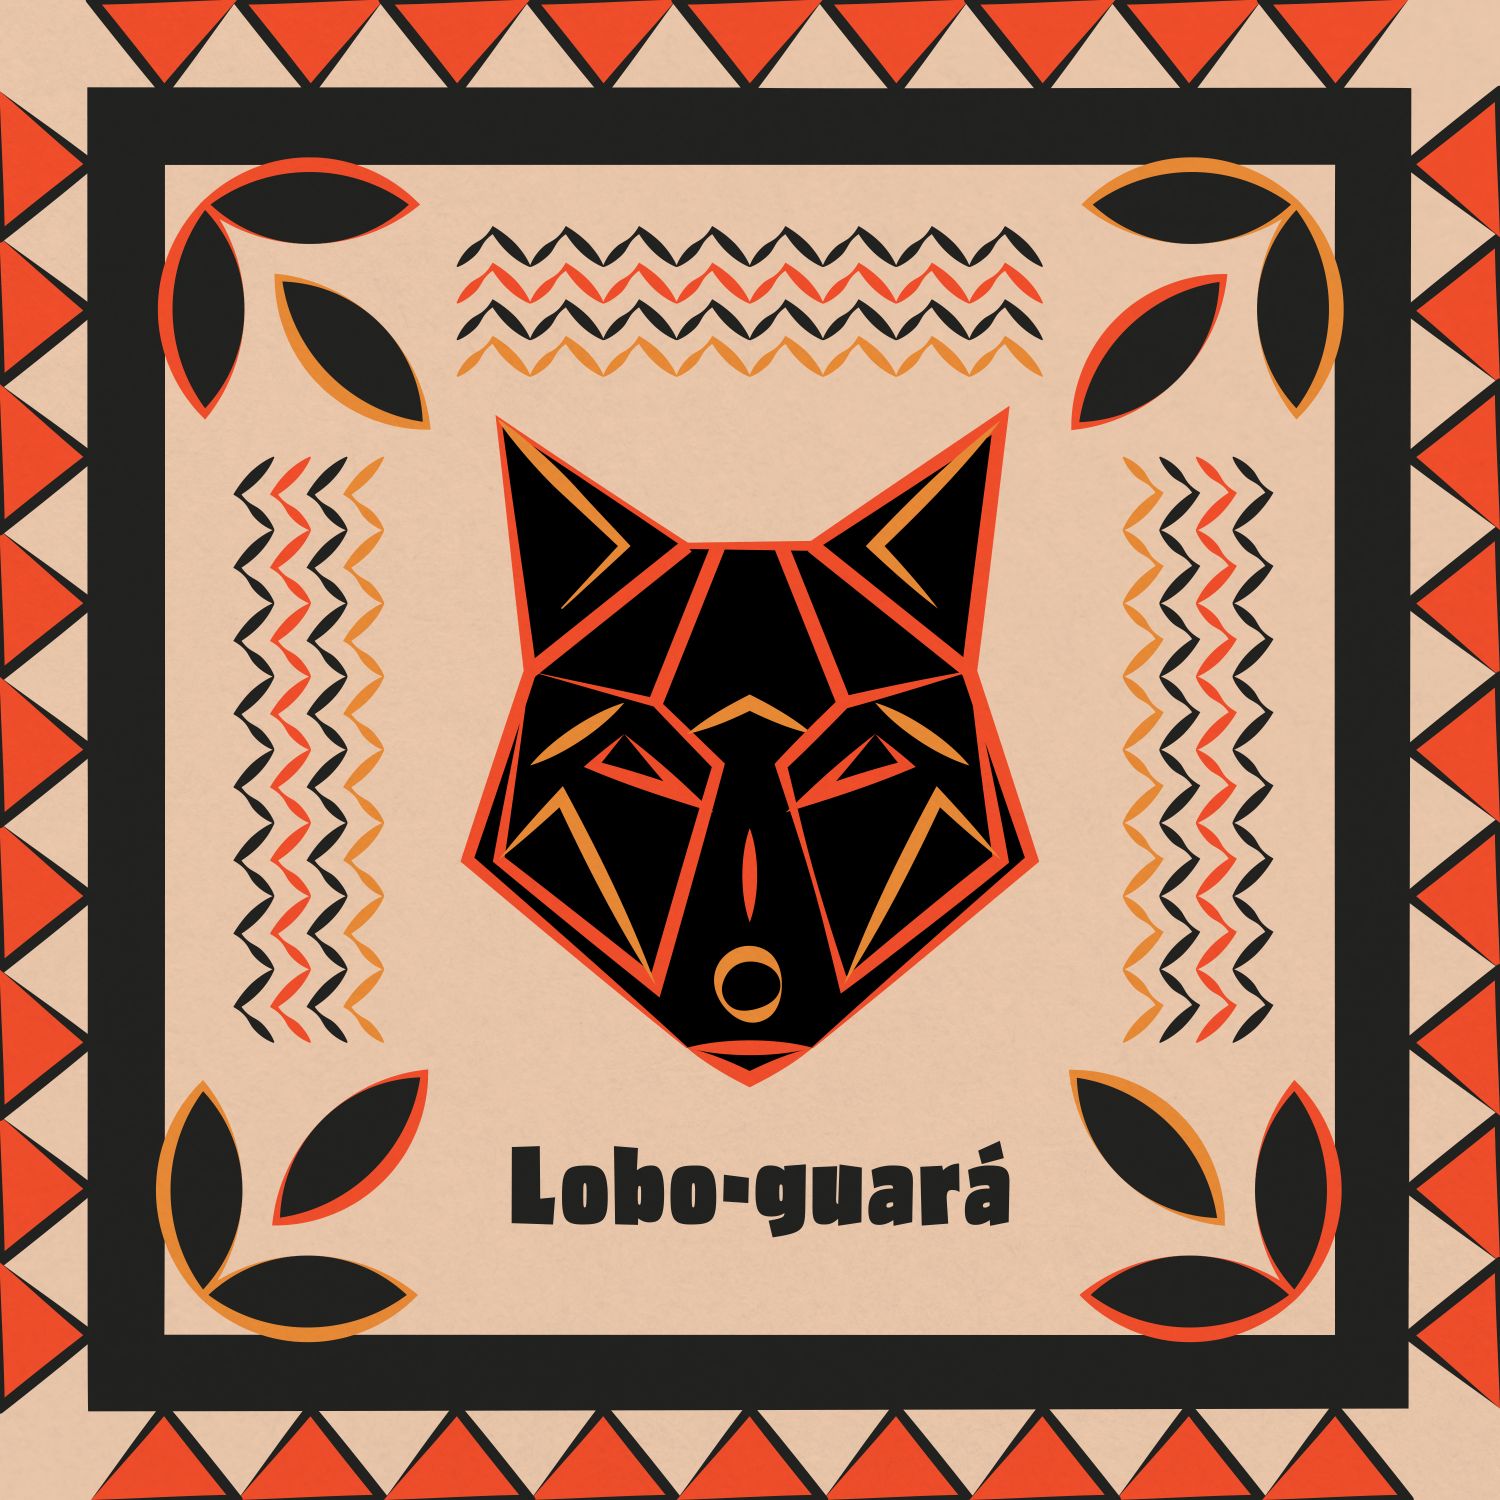 Lobo-guará (Maned wolf)